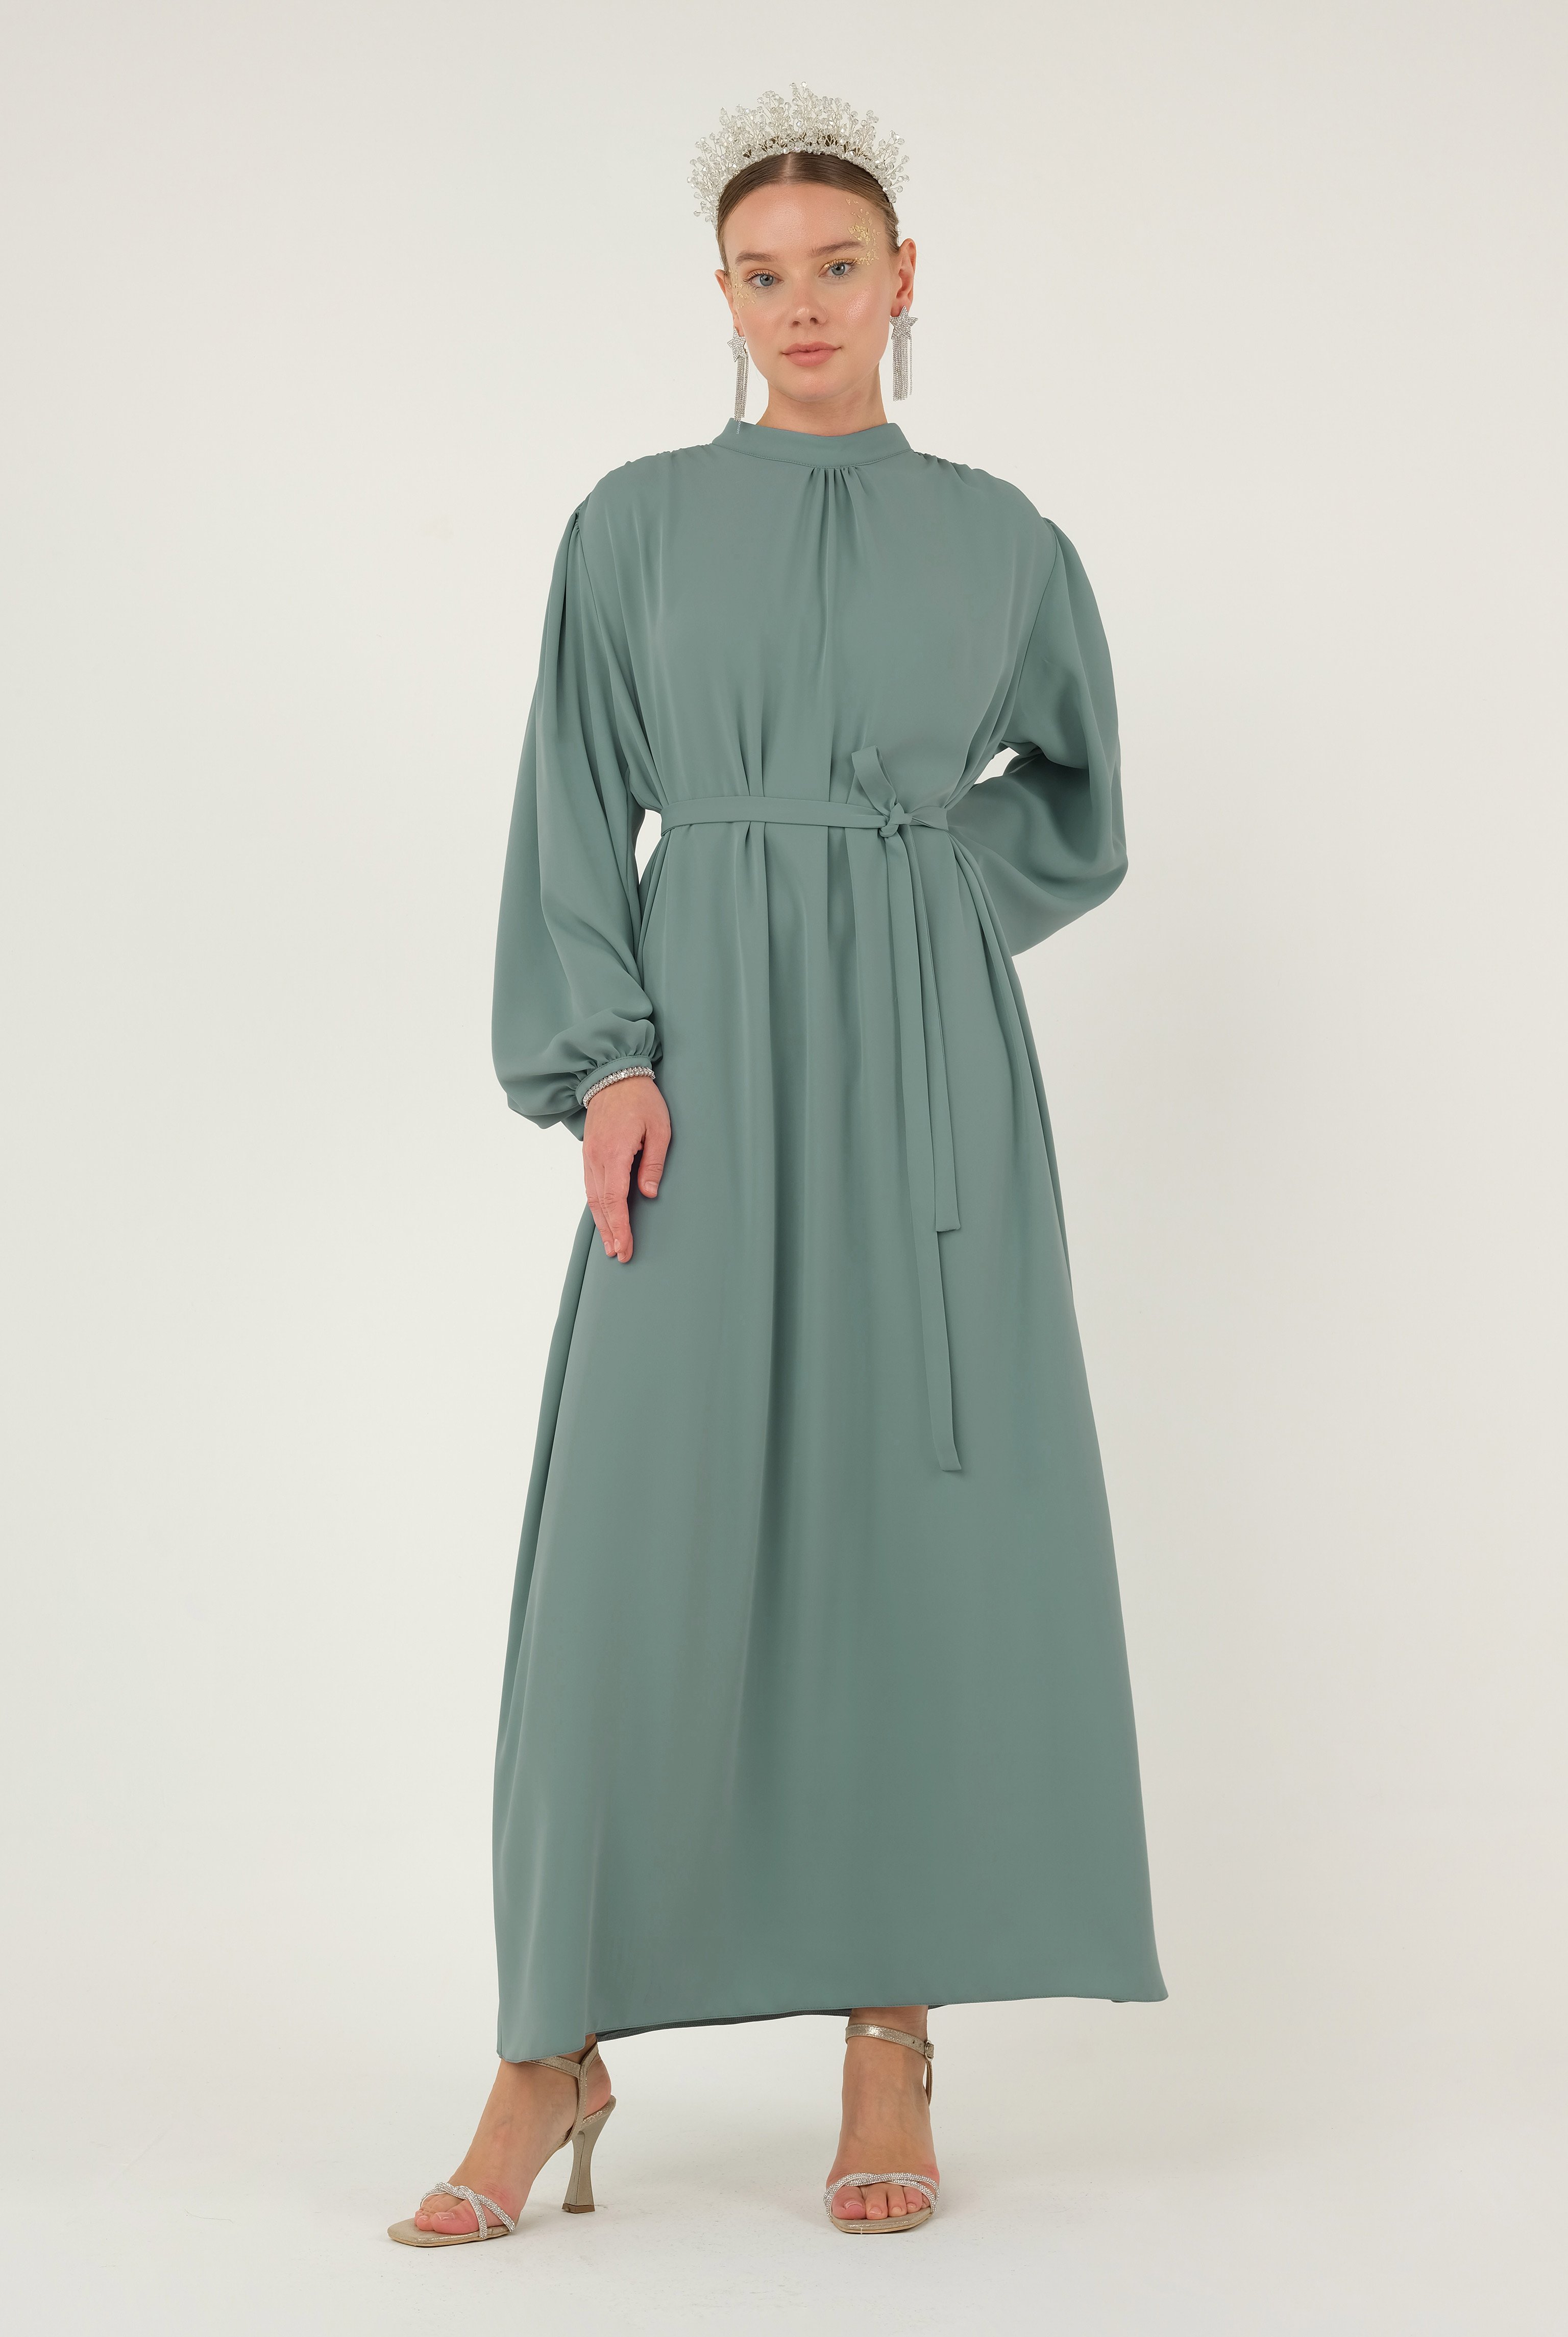 Shirred Collared Dress Mint 